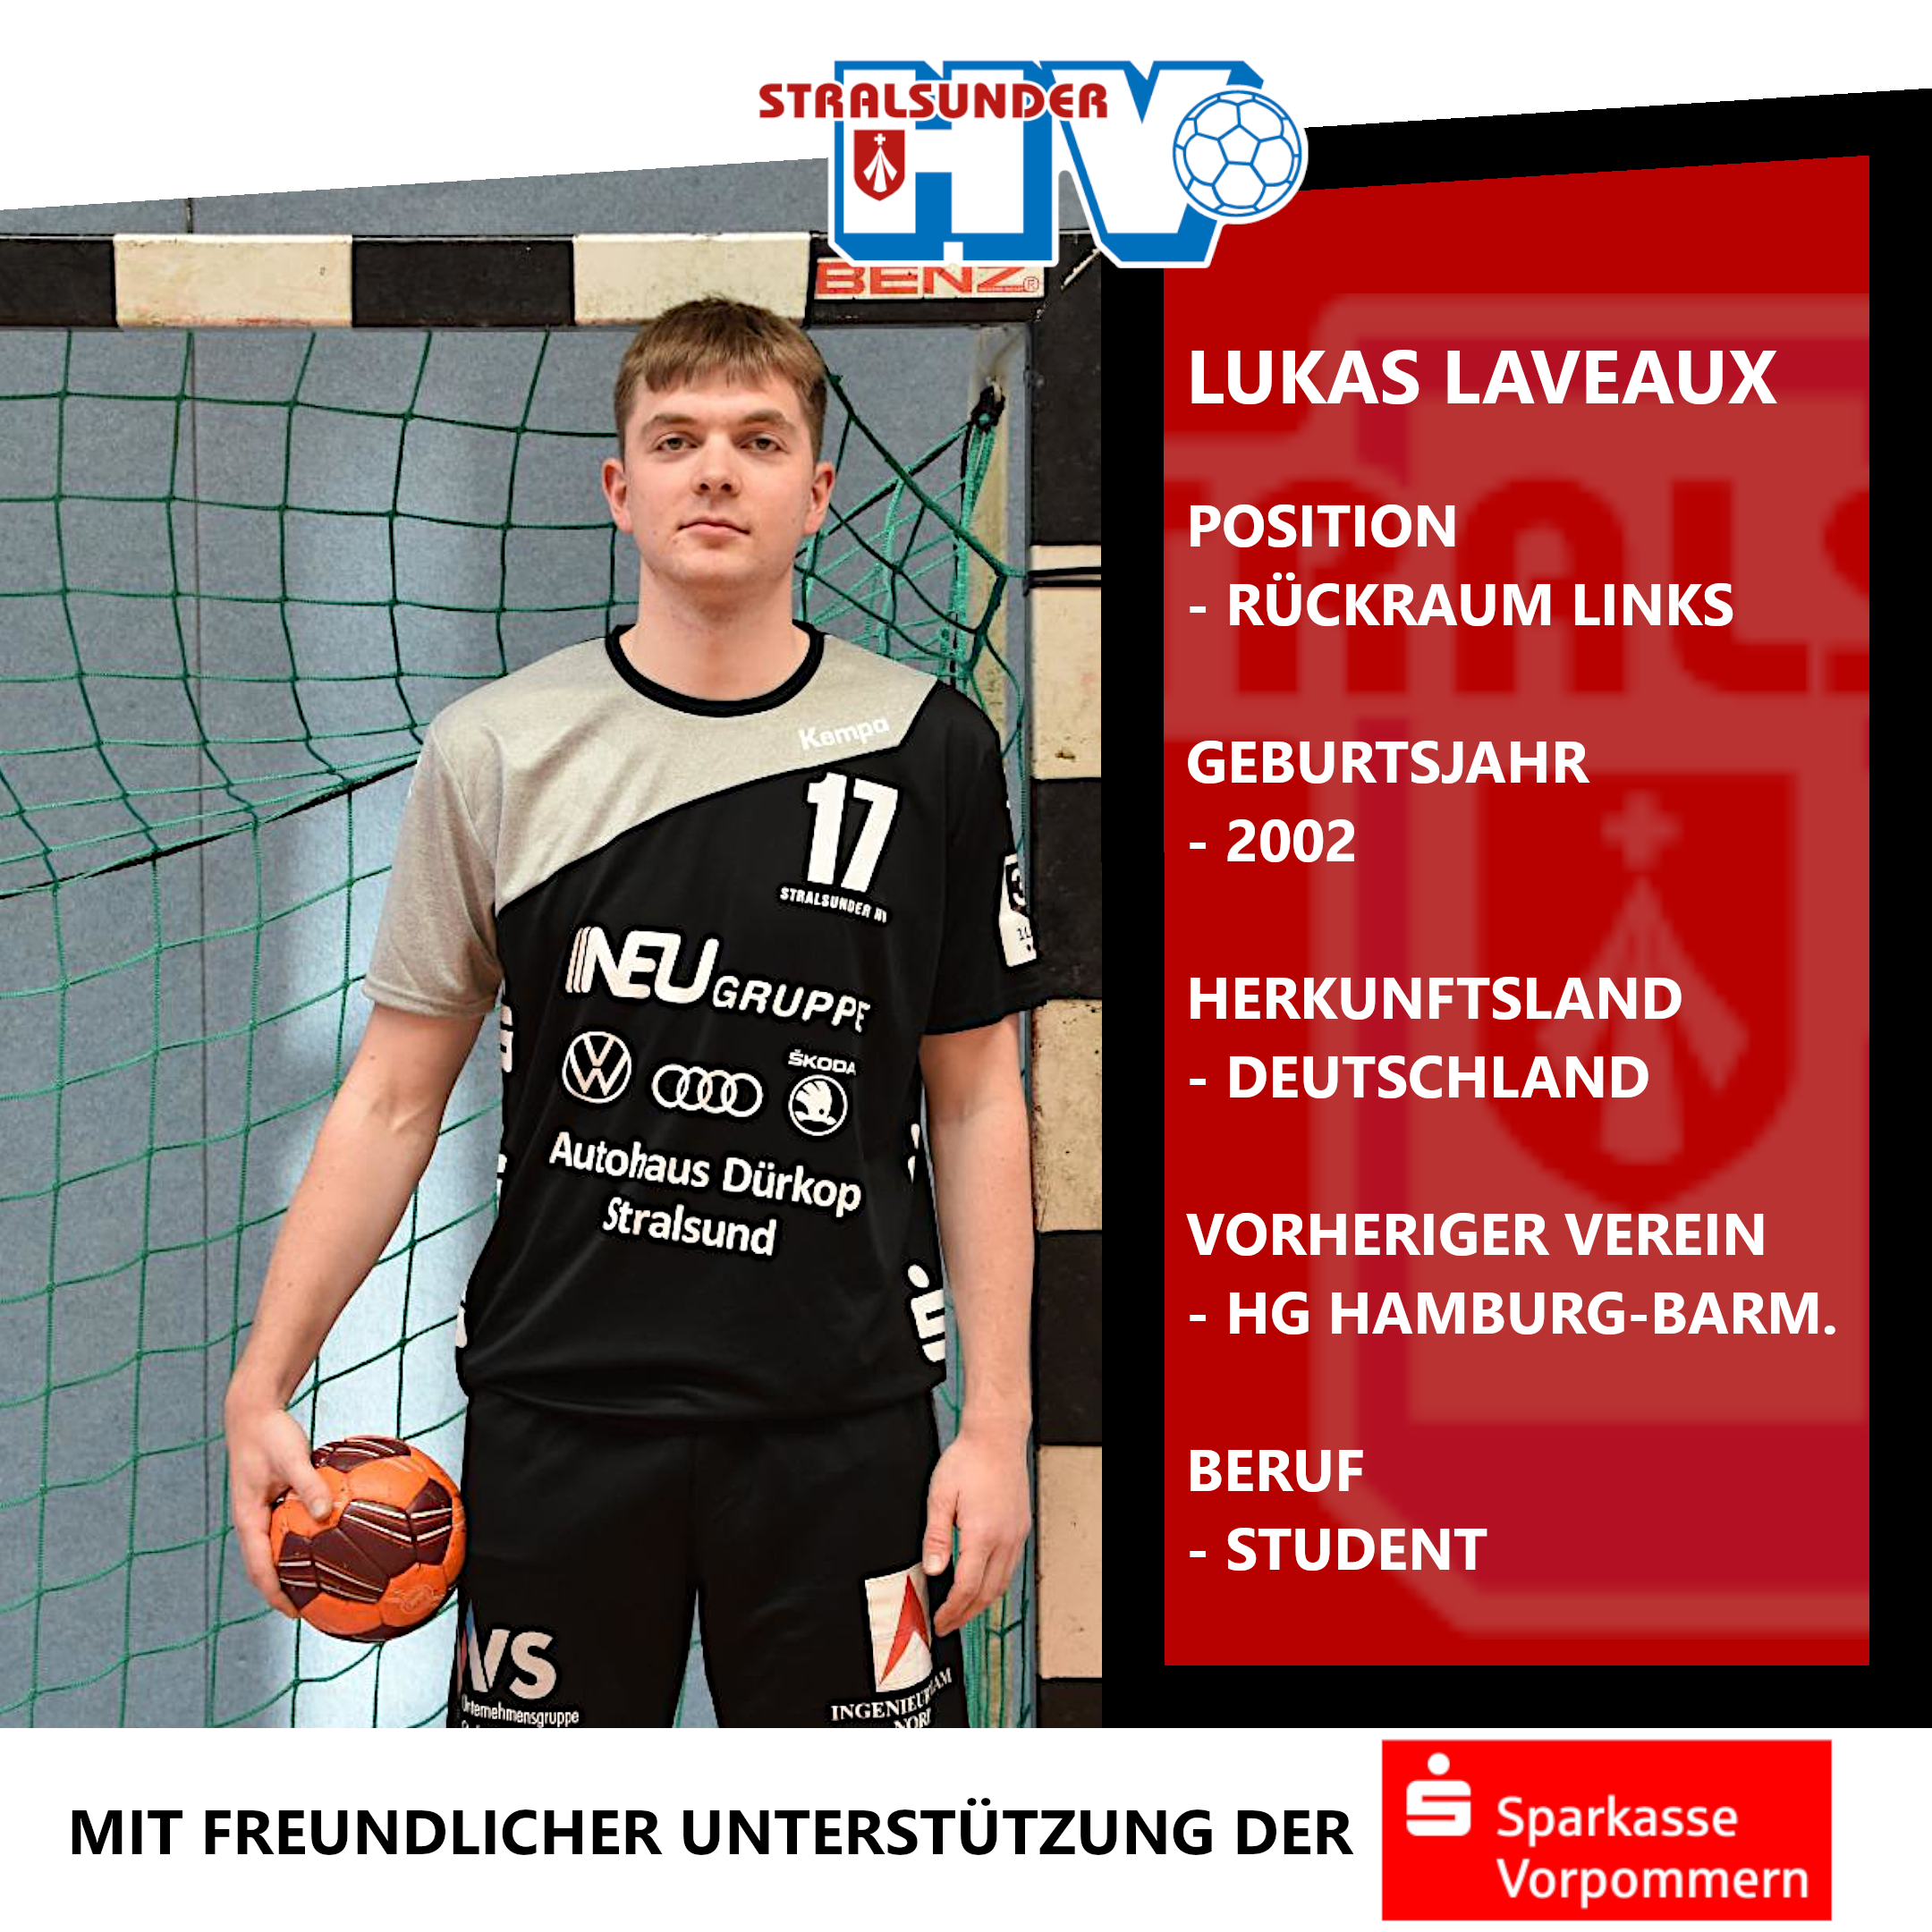 You are currently viewing Wir stellen vor – Lukas Laveaux